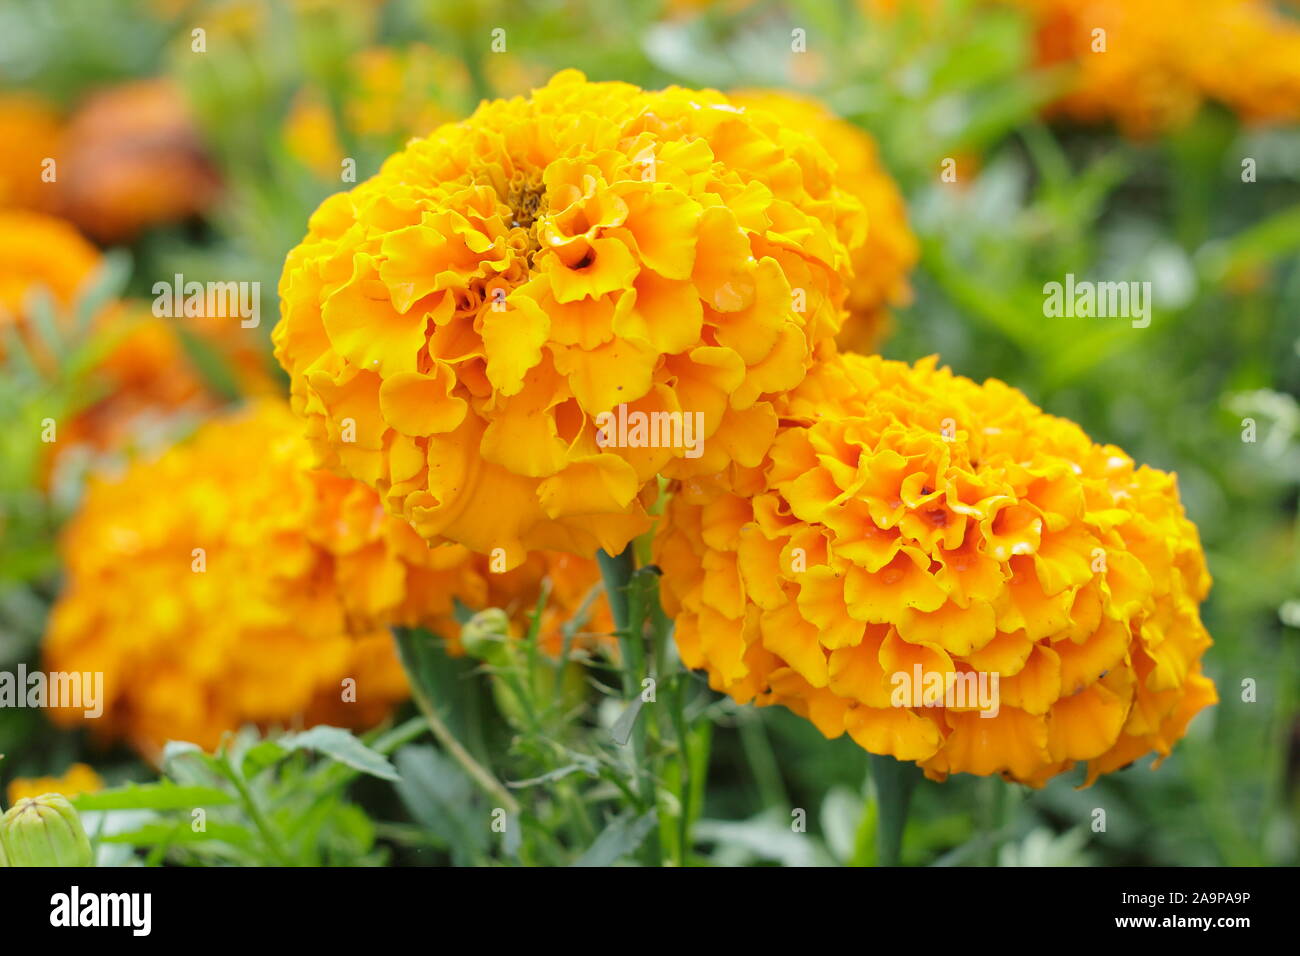 Tagetes erecta. African Marigold 'Marvel Orange' displaying distinctive large double blooms in alte summer. F1. Stock Photo